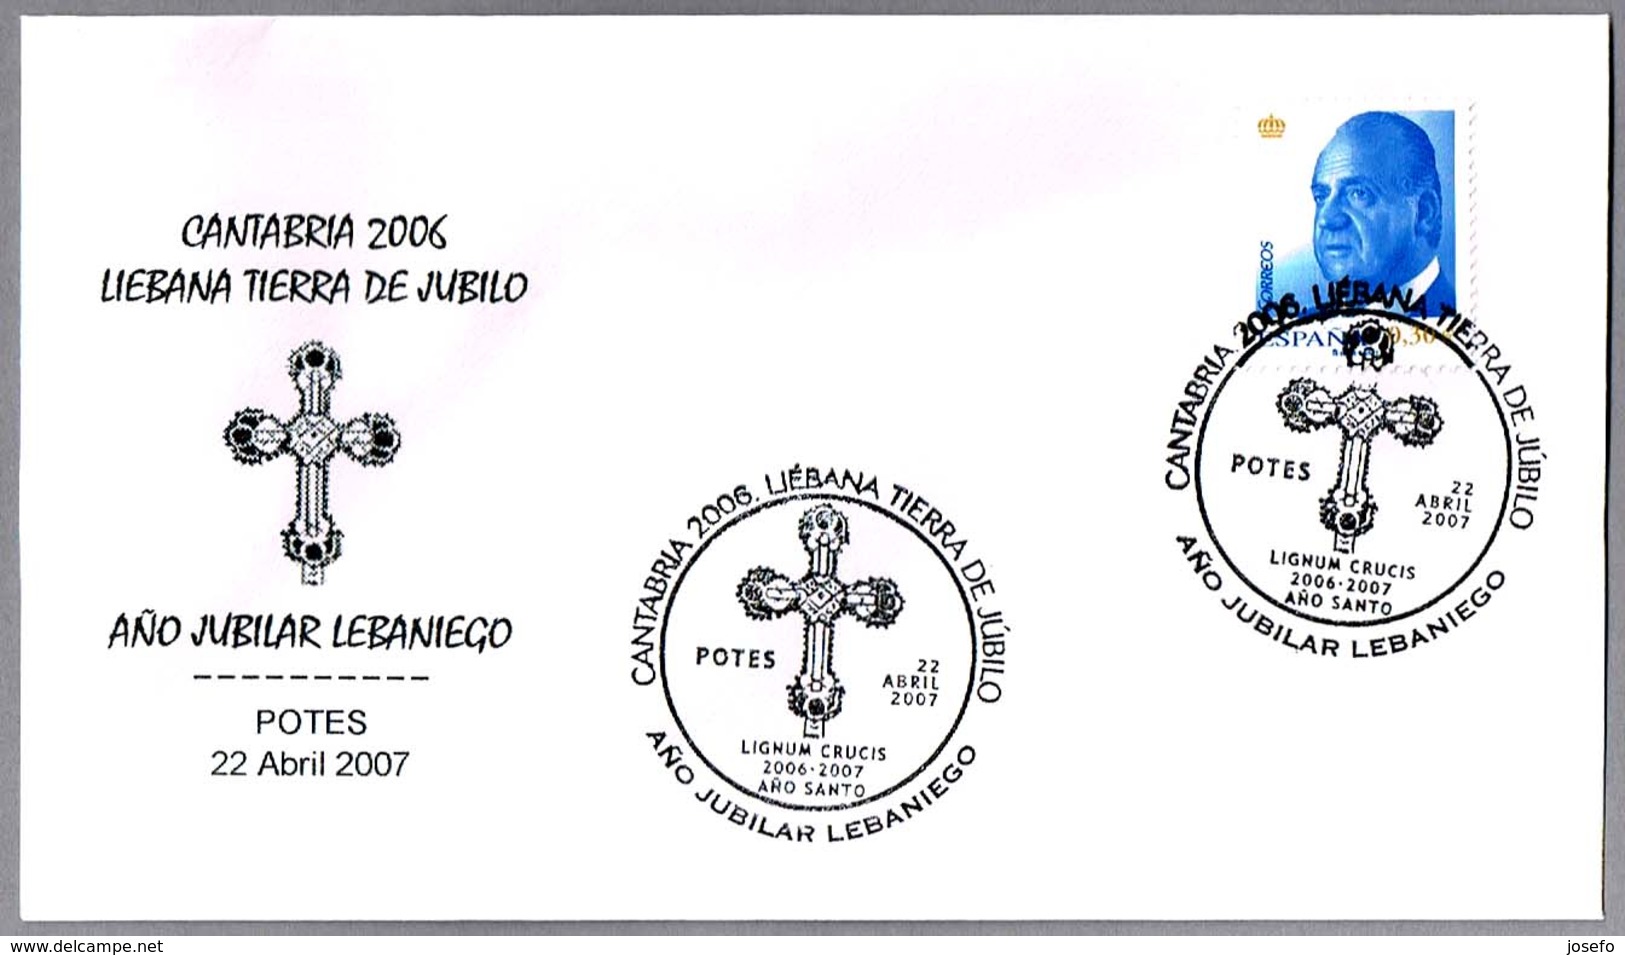 AÑO JUBILAR LEBANIEGO - LIEBANA TIERRA DE JUBILO - LIGNUM CRUCIS. Potes, Cantabria, 2007 - Cristianismo